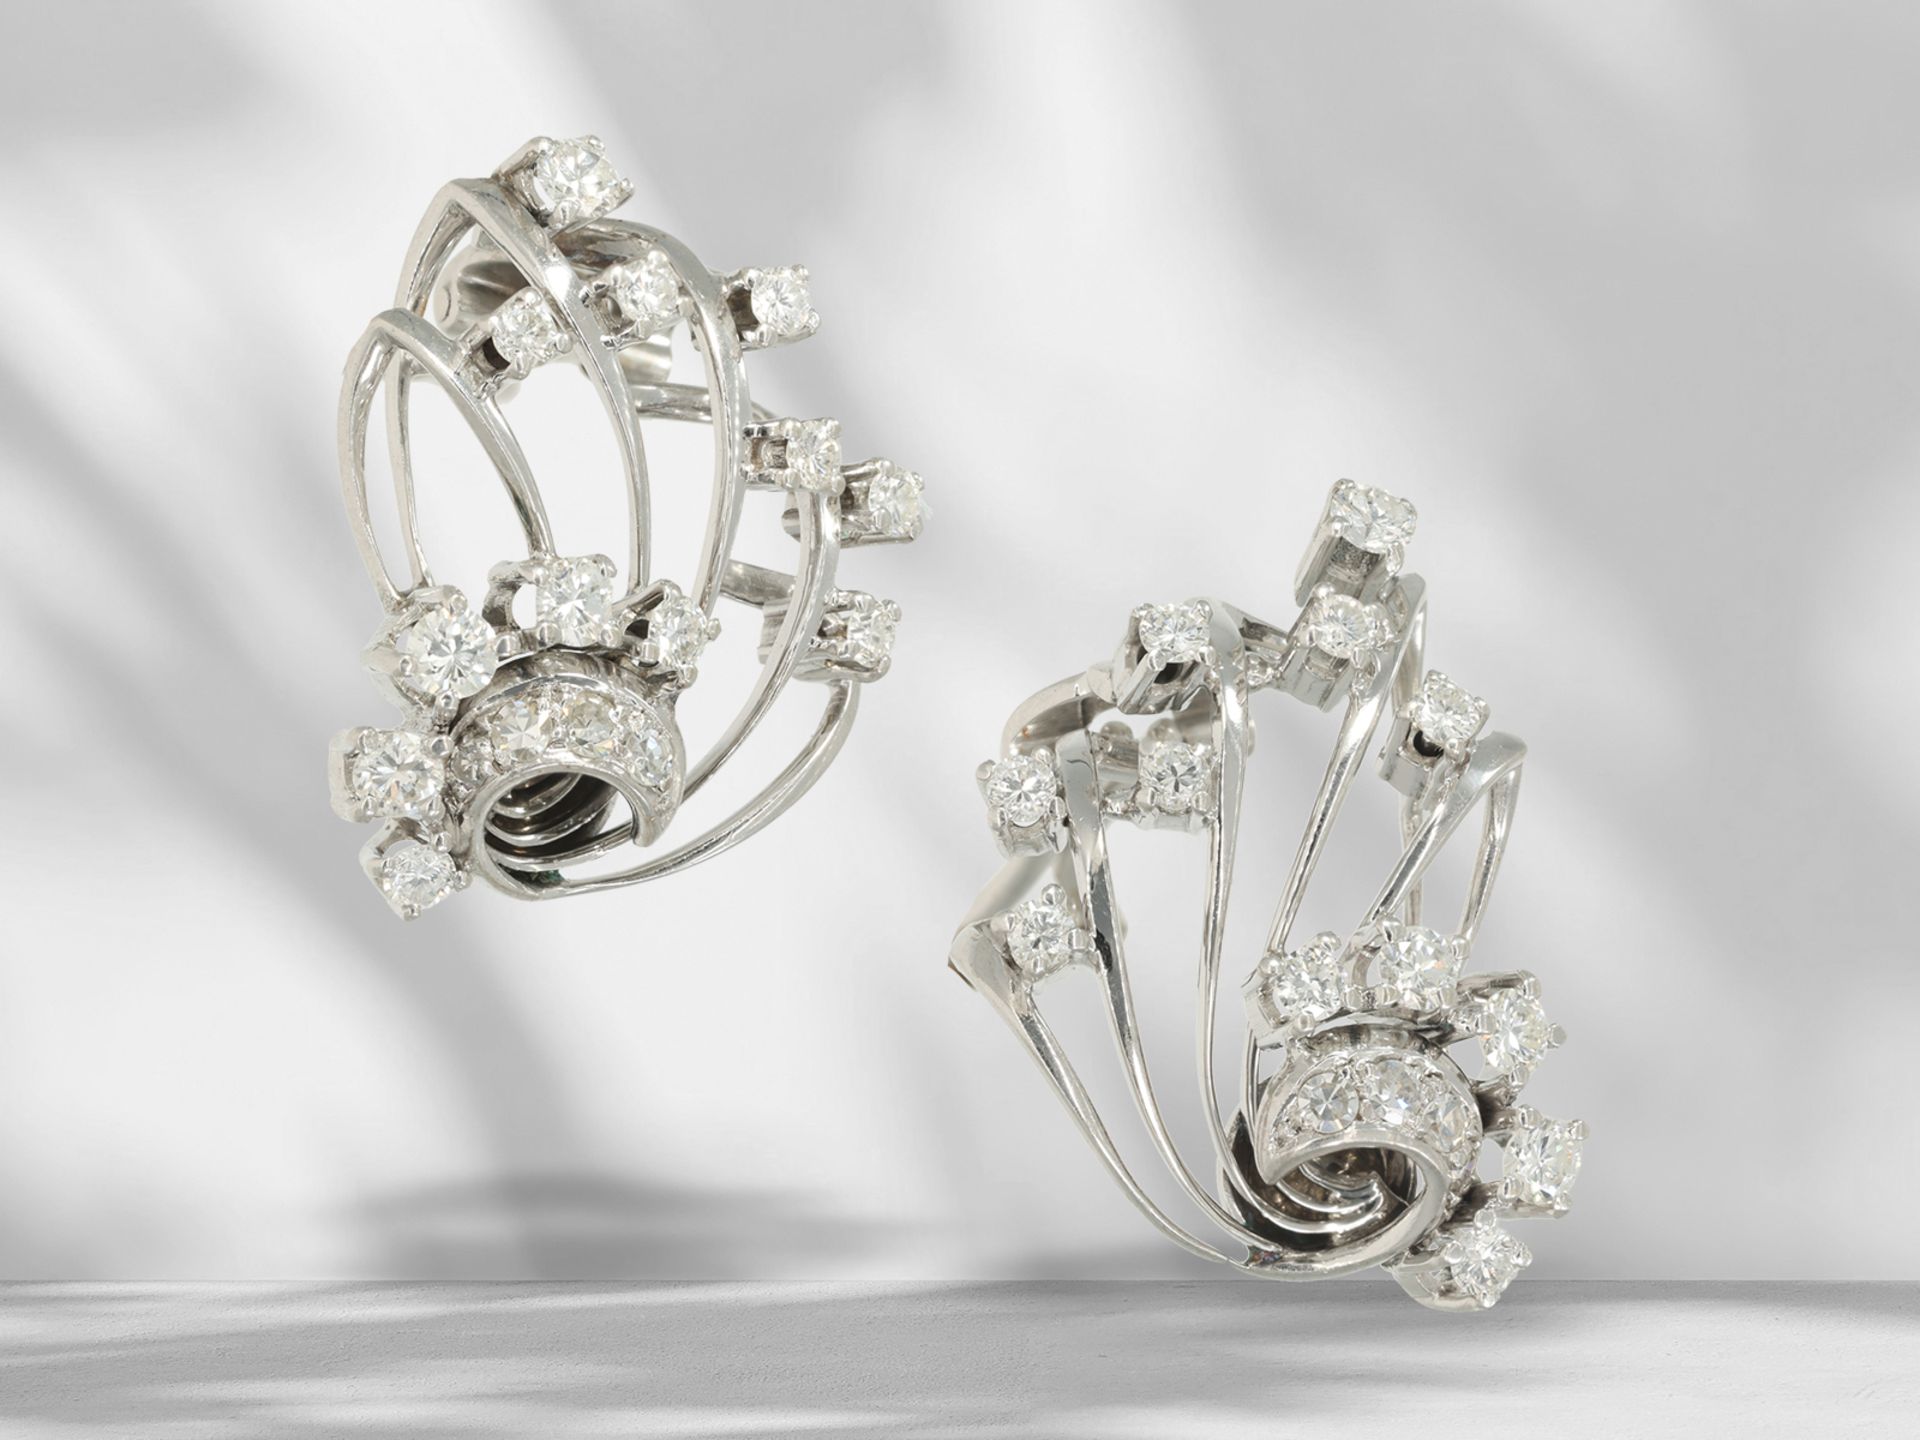 Earrings: decorative designer goldsmith work with brilliant-cut diamonds, 18K white gold, handmade b